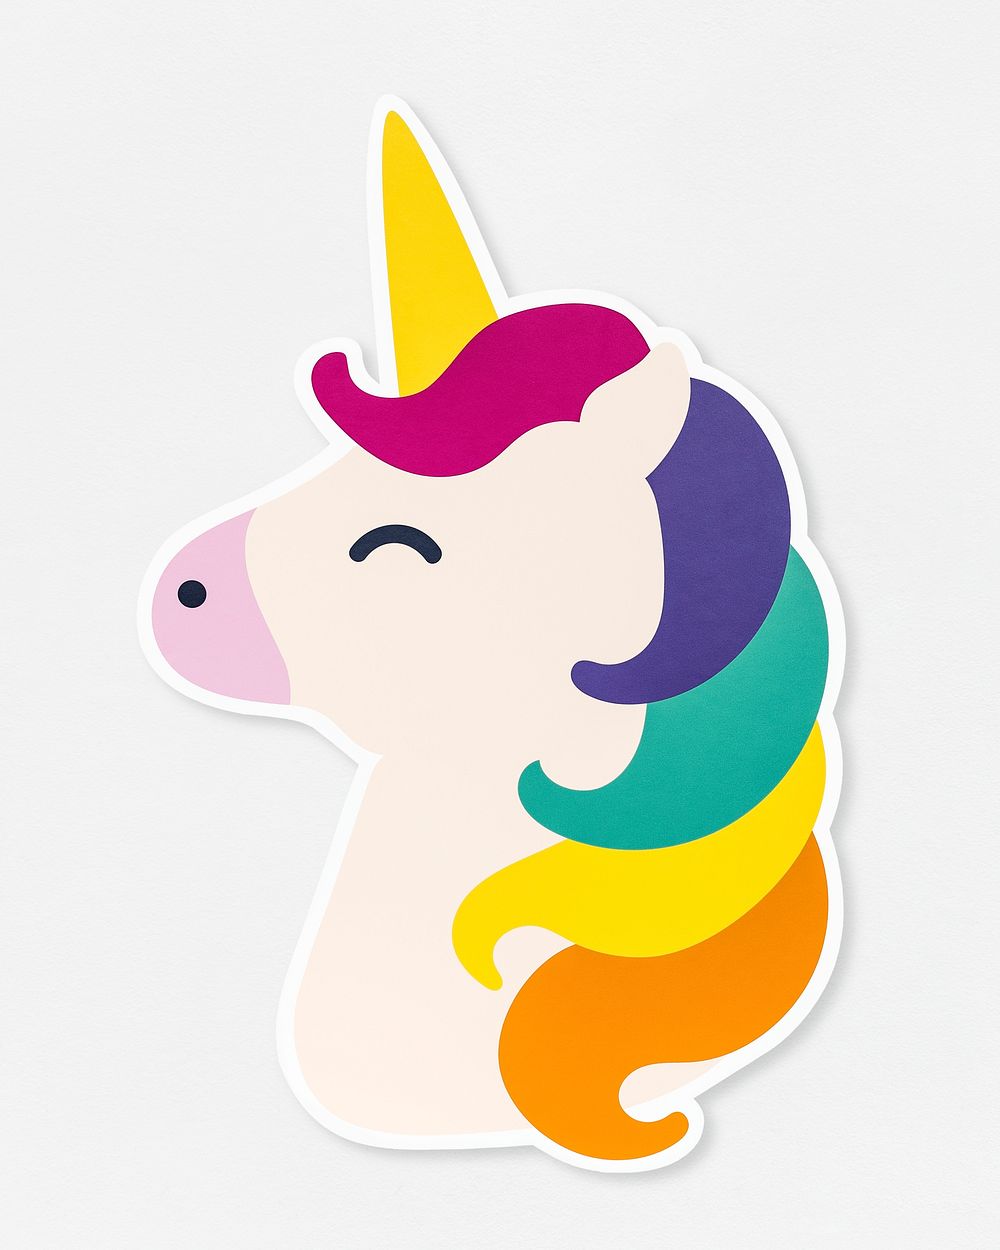 Cute unicorn with rainbow colored hair